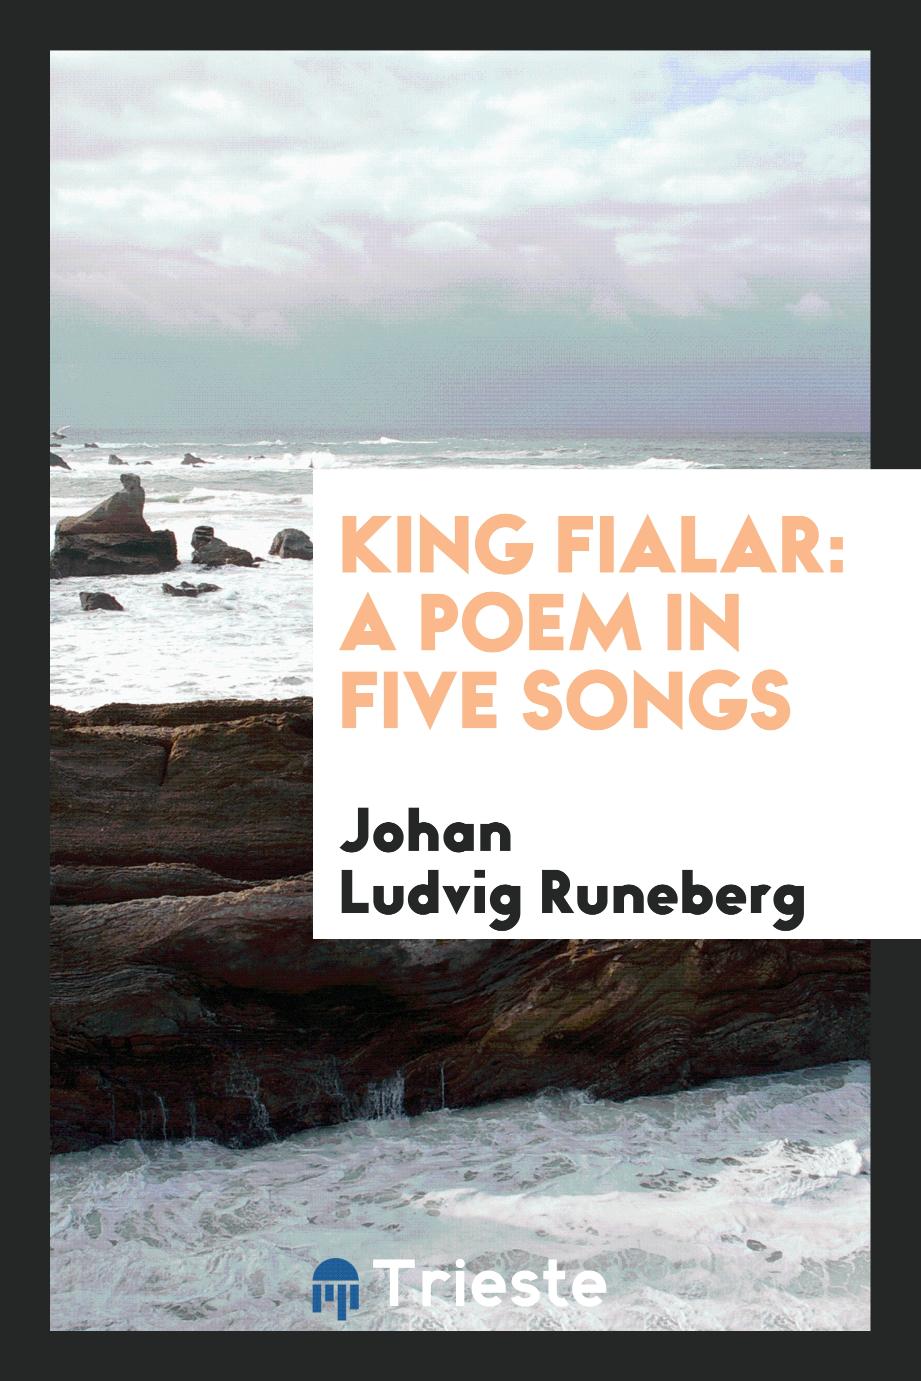 King Fialar: a poem in five songs